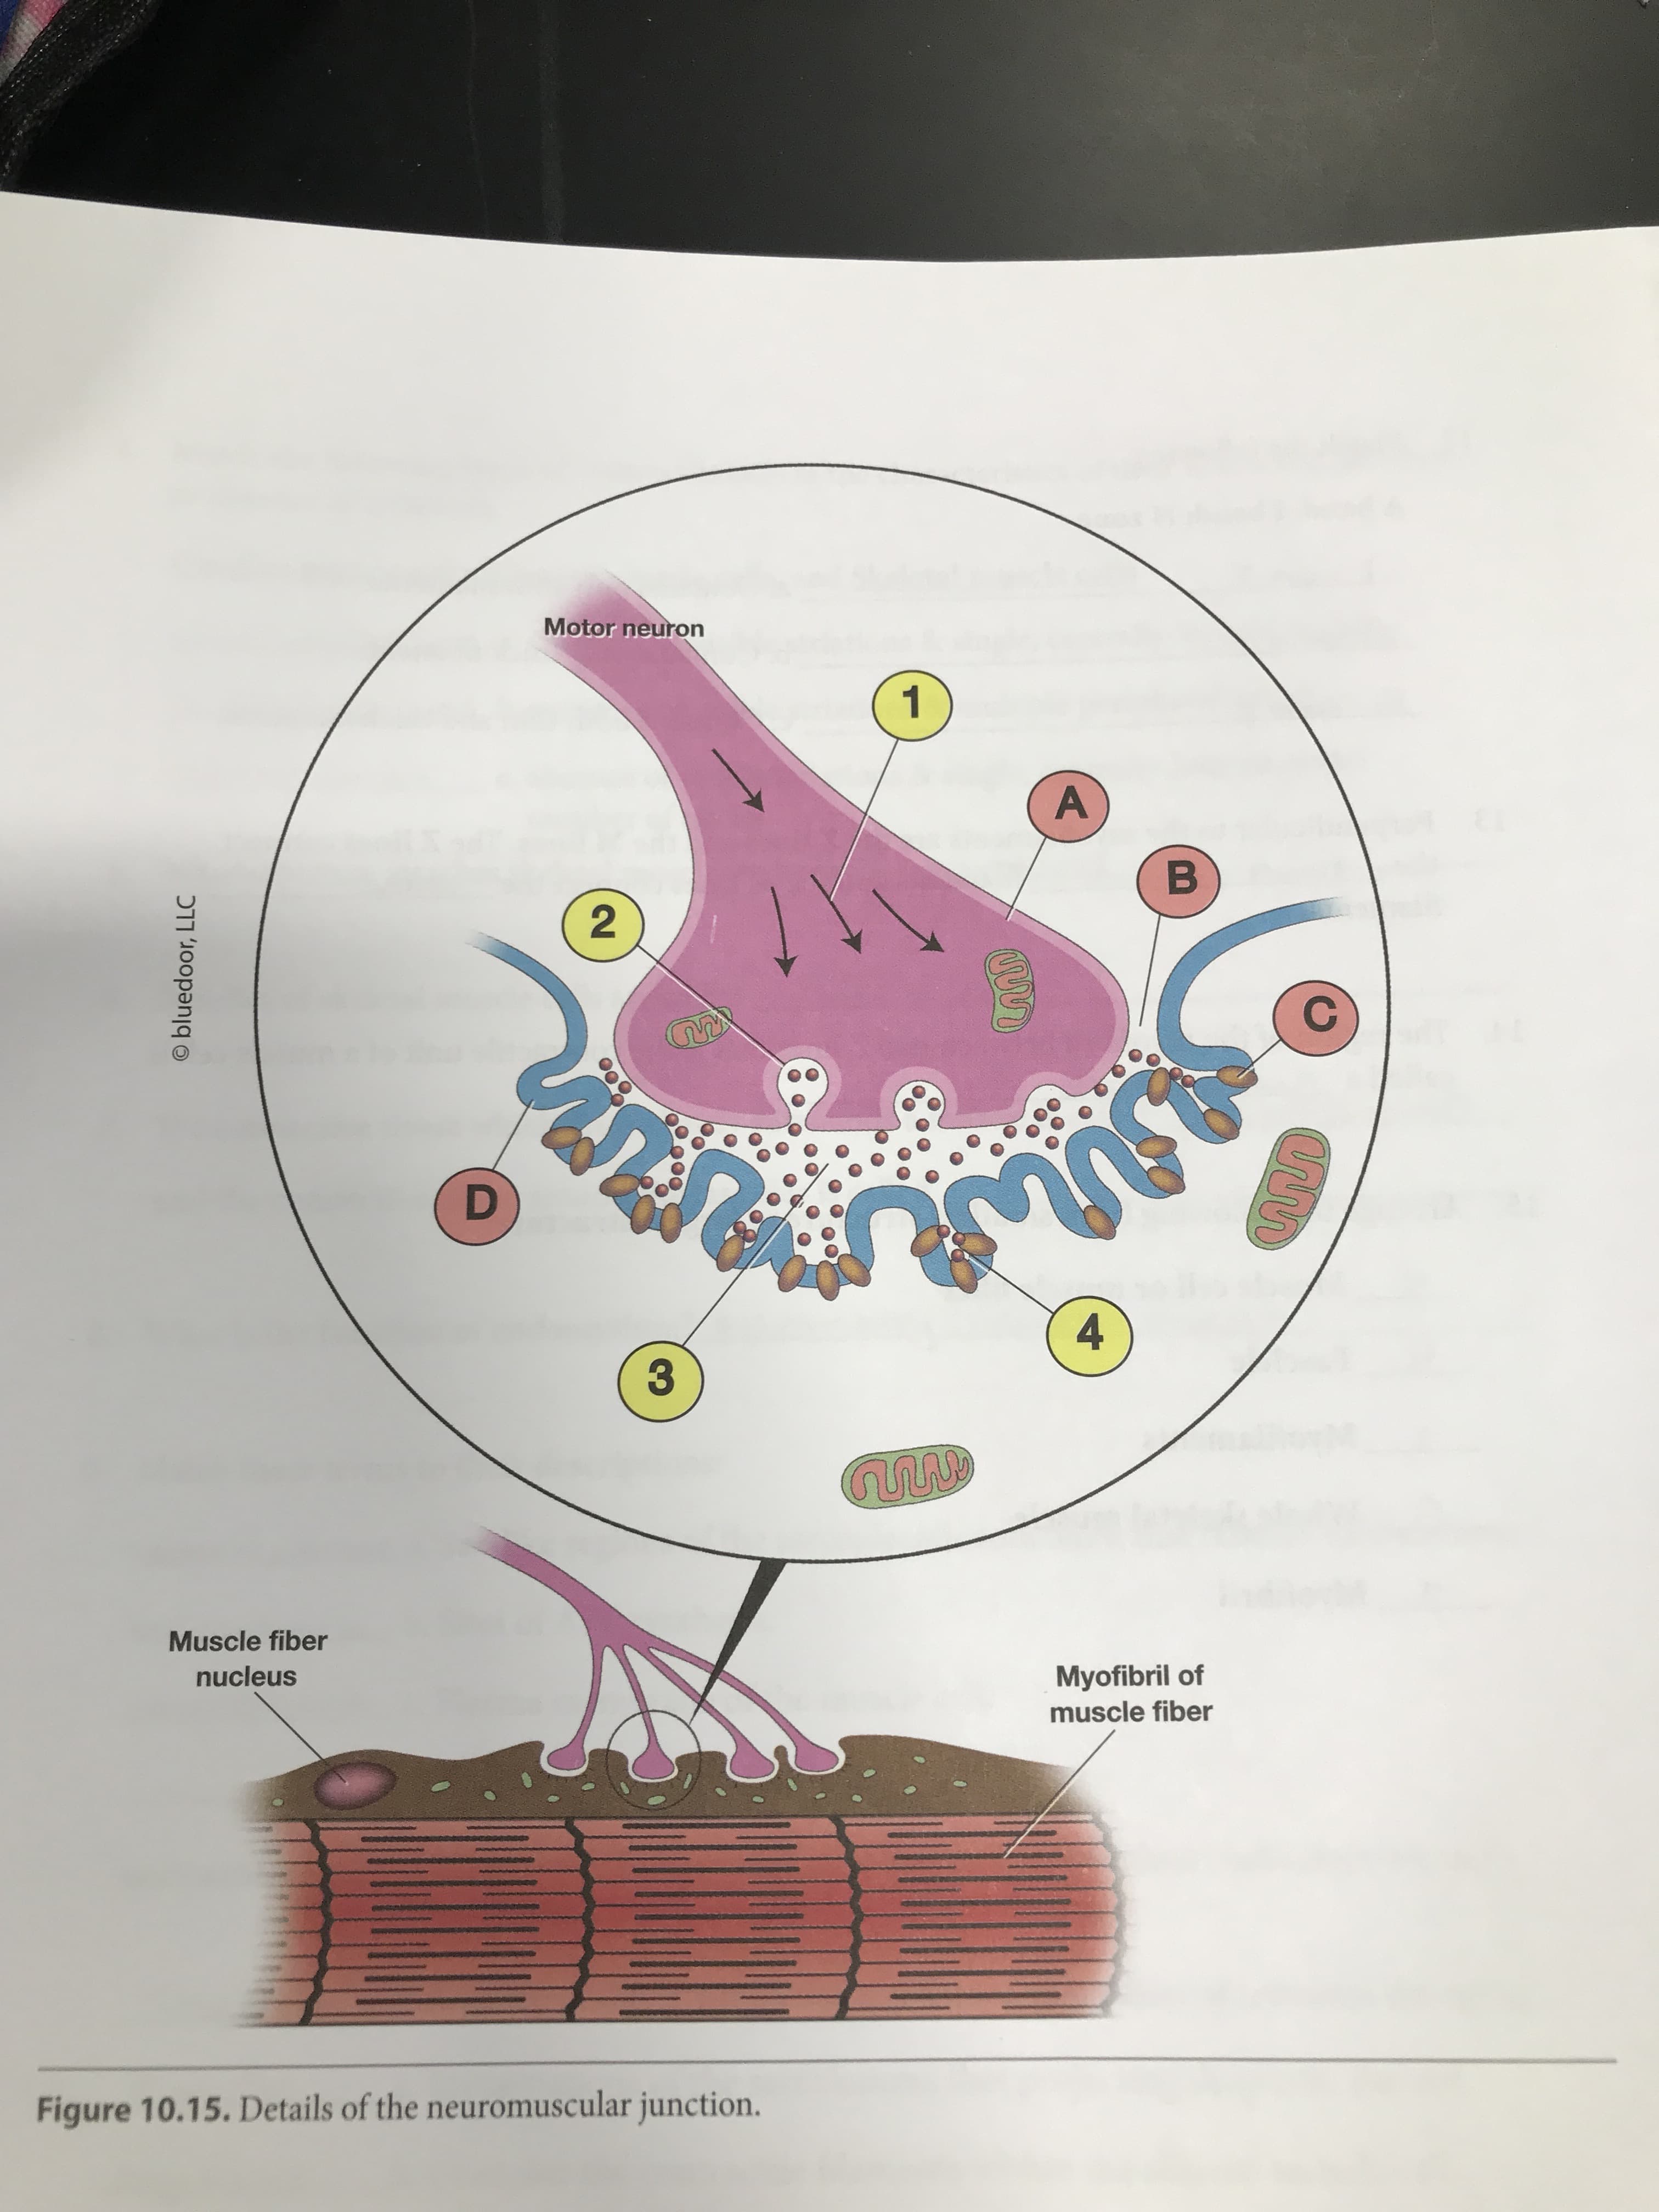 Motor neuron
1.
4
Muscle fiber
nucleus
Myofibril of
muscle fiber
Figure 10.15. Details of the neuromuscular junction.
O bluedoor, LLC
